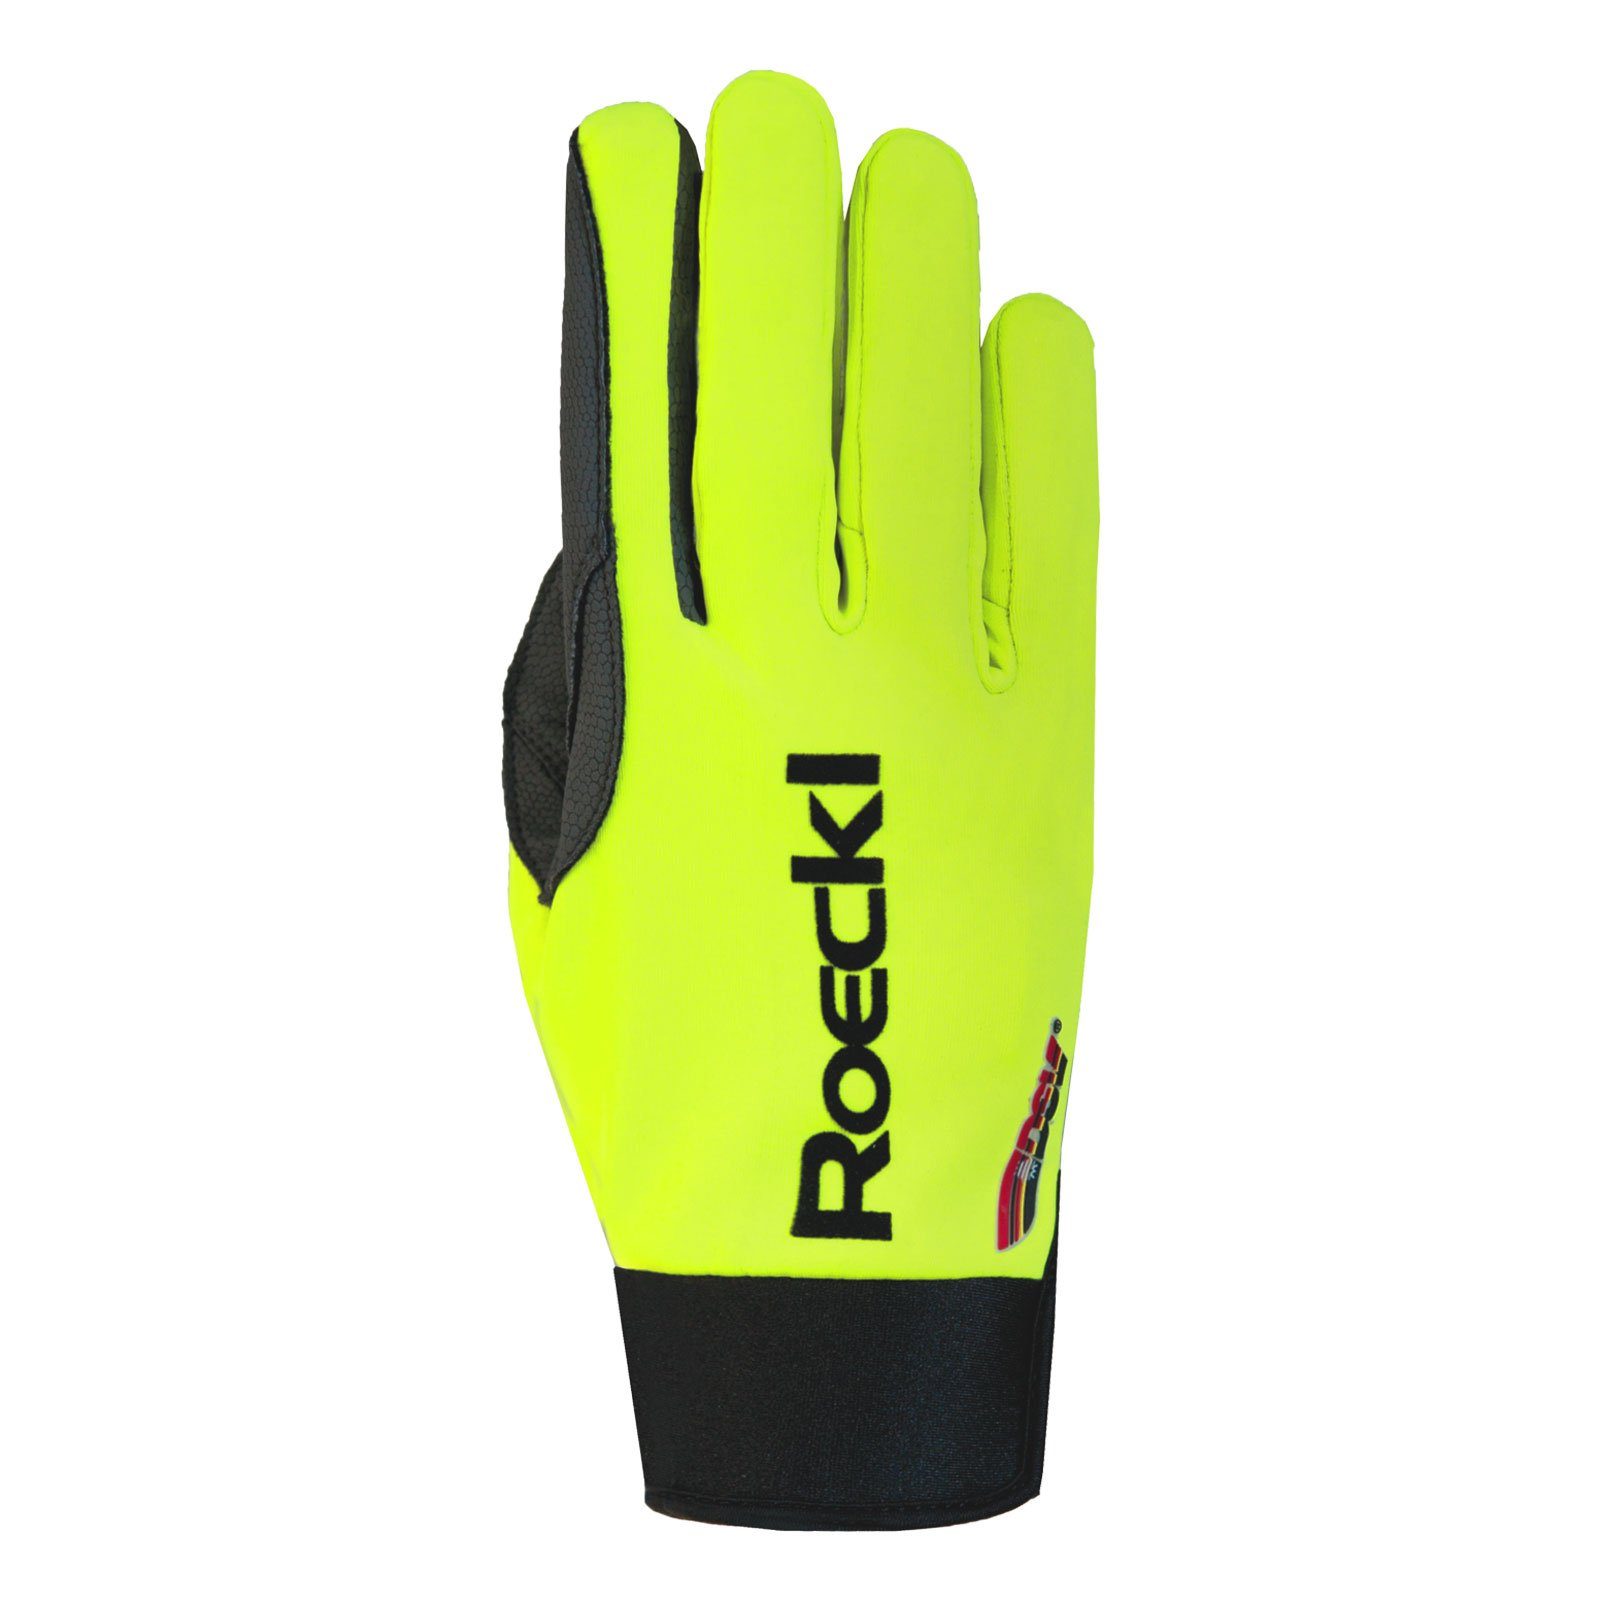 Roeckl SPORTS Langlaufhandschuhe Lit Original DSV (Deutscher Skiverband)  Handschuh